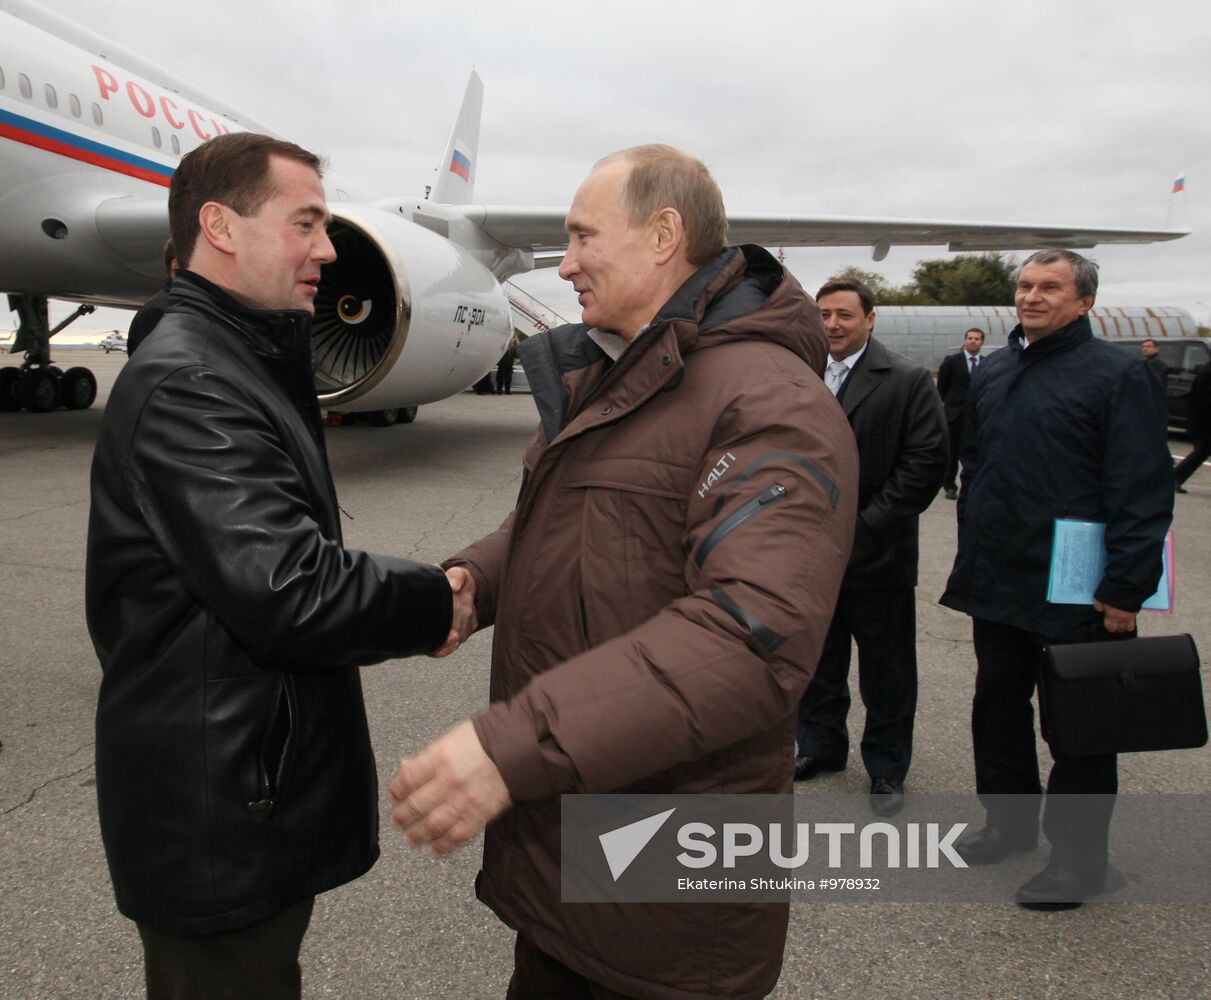 Dmity Medvedev, Vladimir Putin visit Stavropol